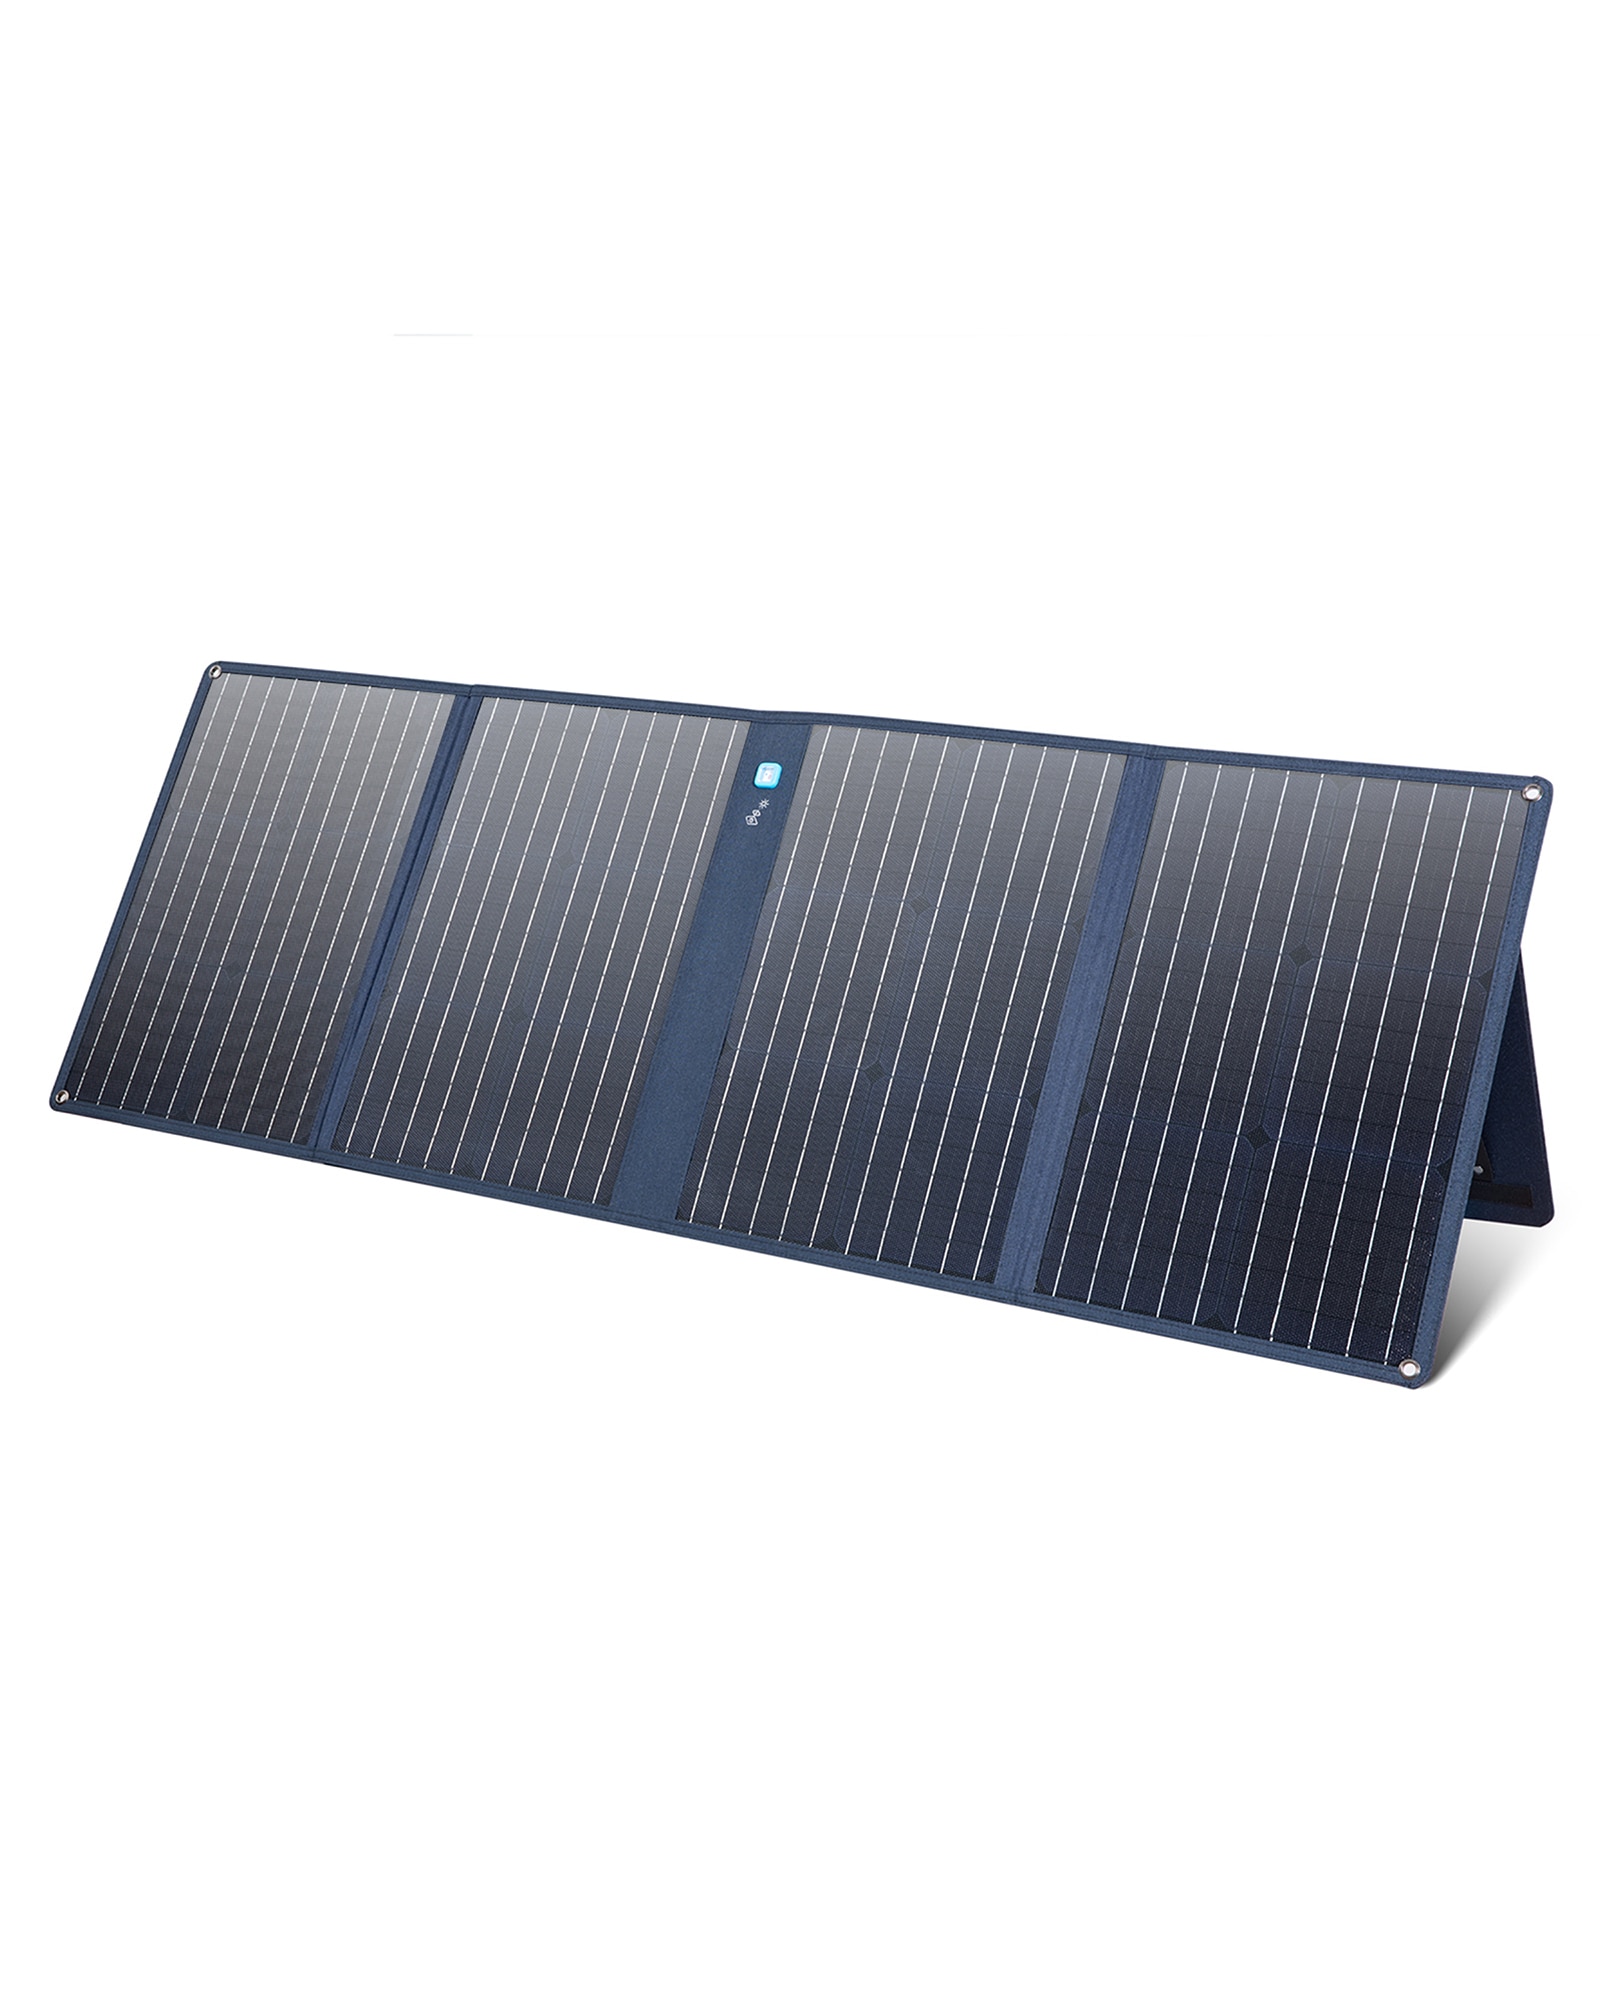 Anker 625 S100W 3-Port Monocrystal Solar Charger